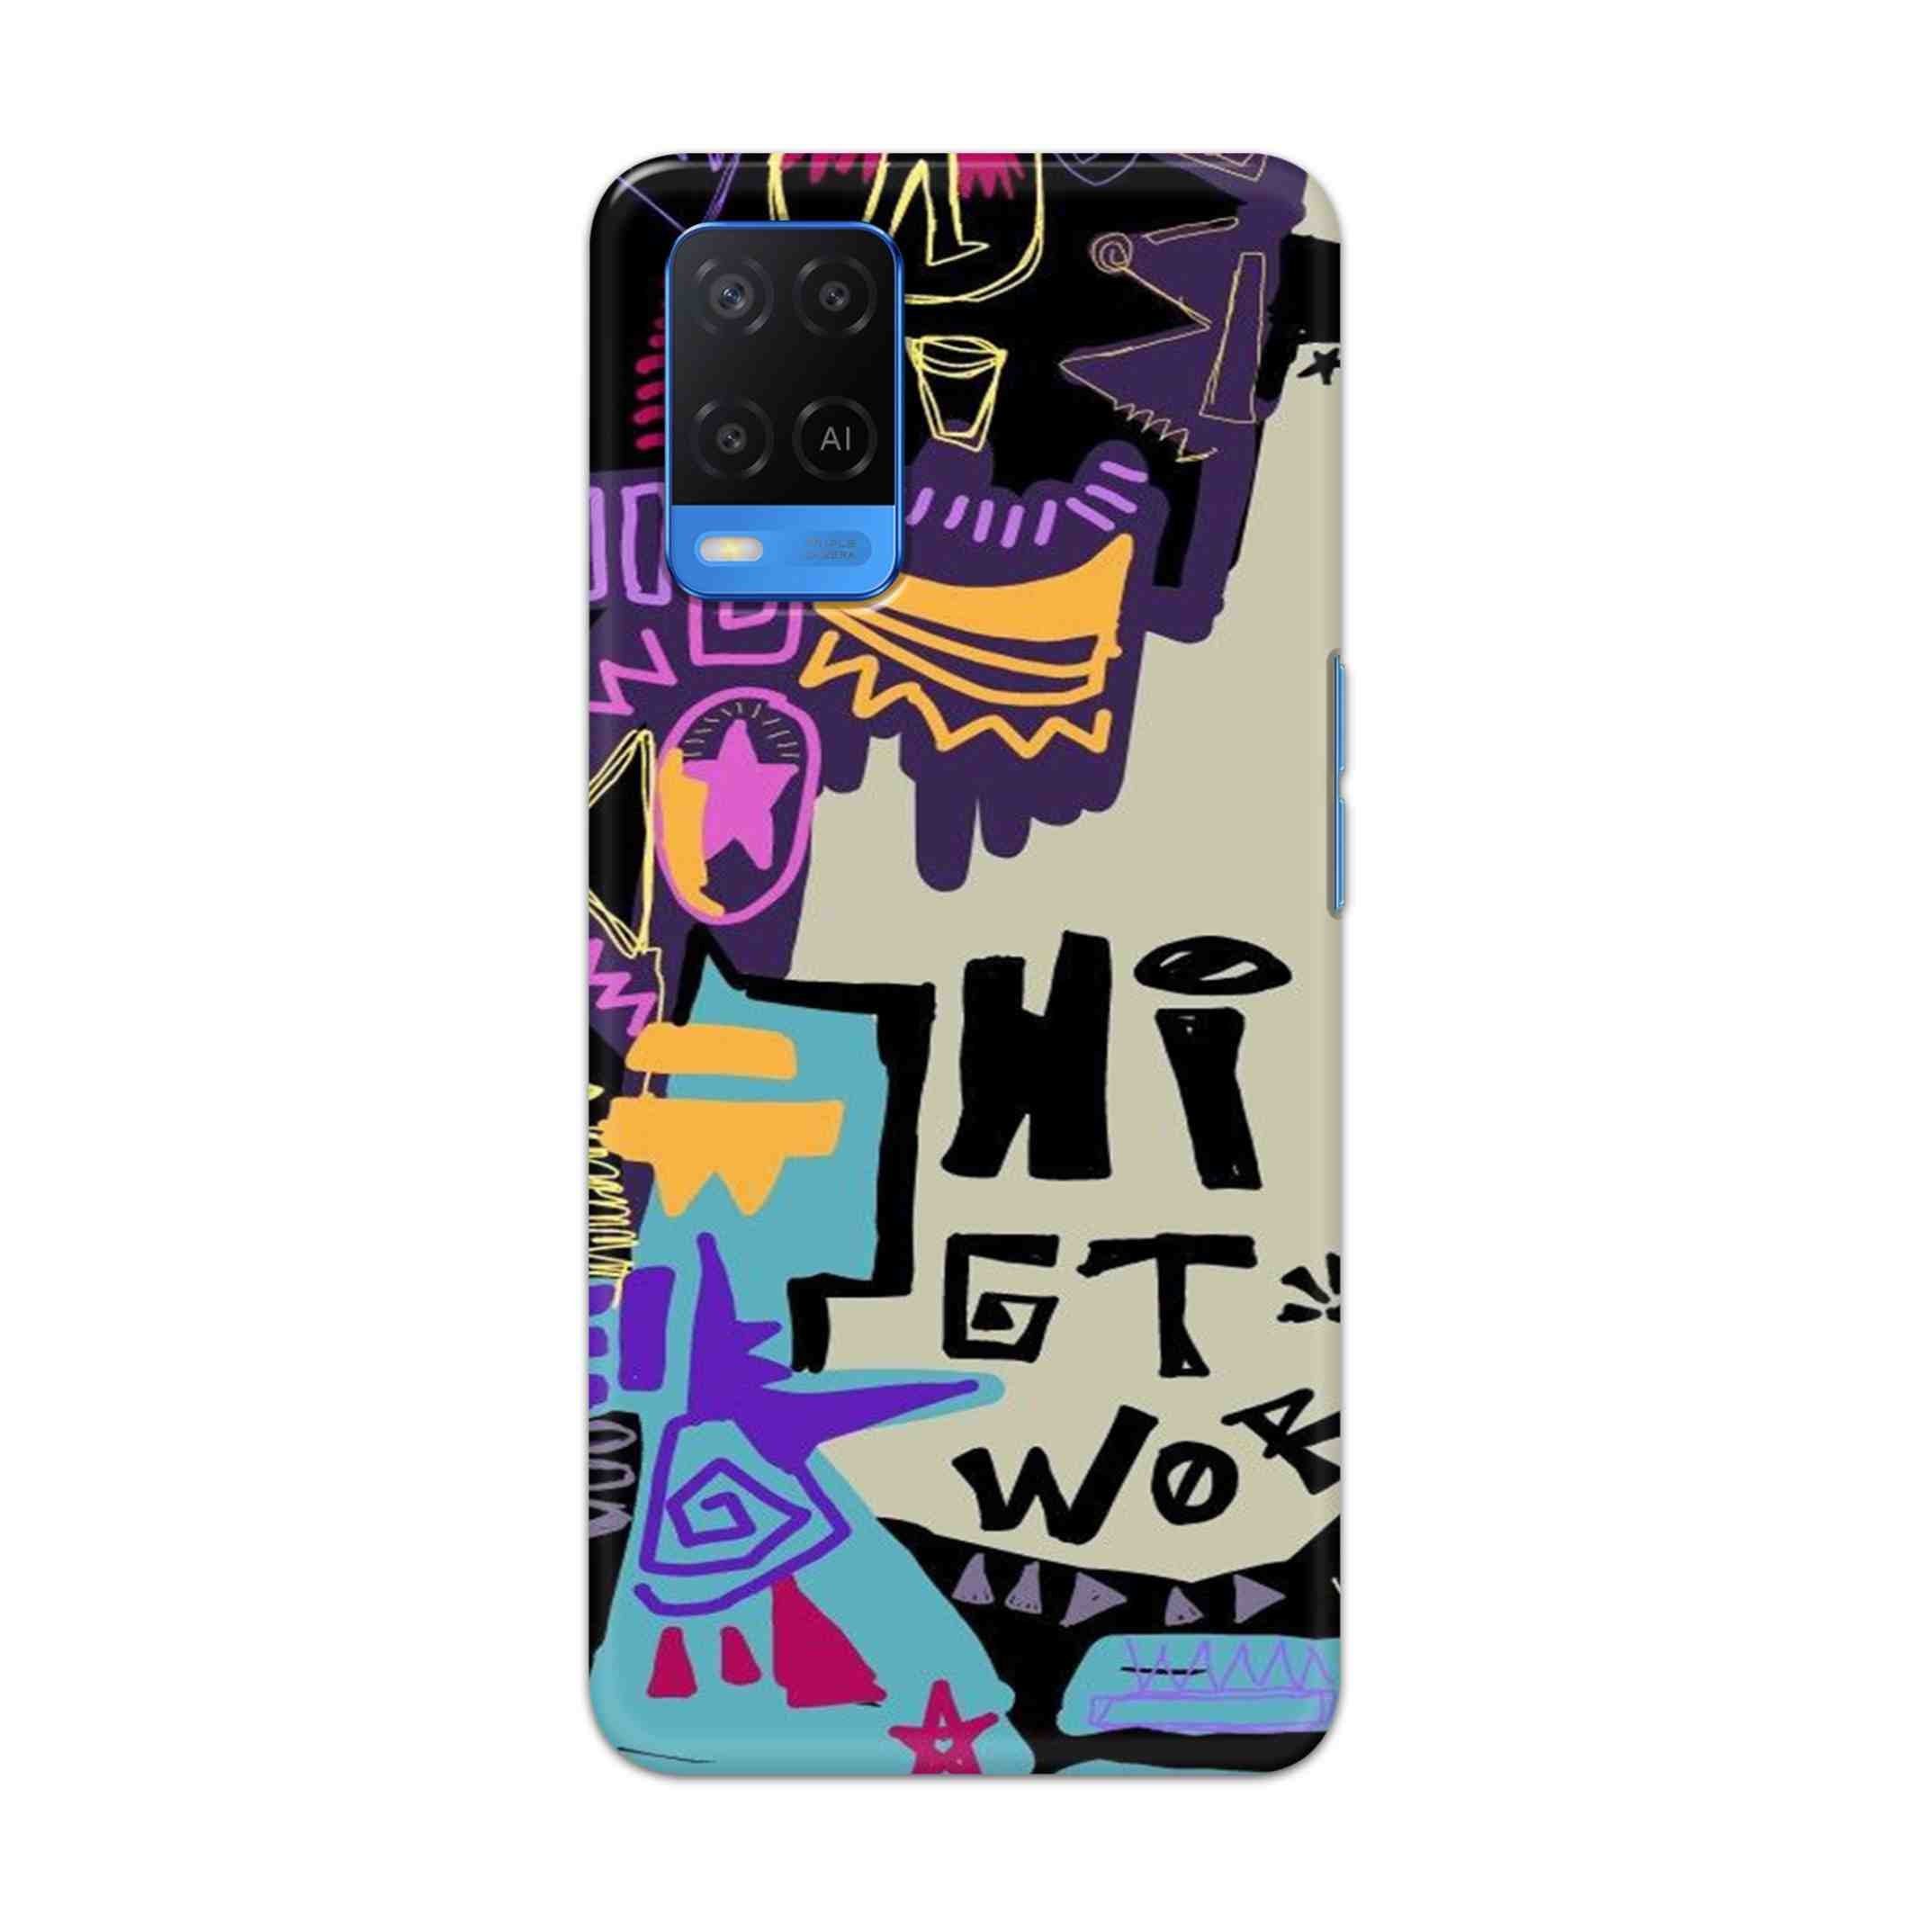 Buy Hi Gt World Hard Back Mobile Phone Case Cover For Oppo A54 (4G) Online